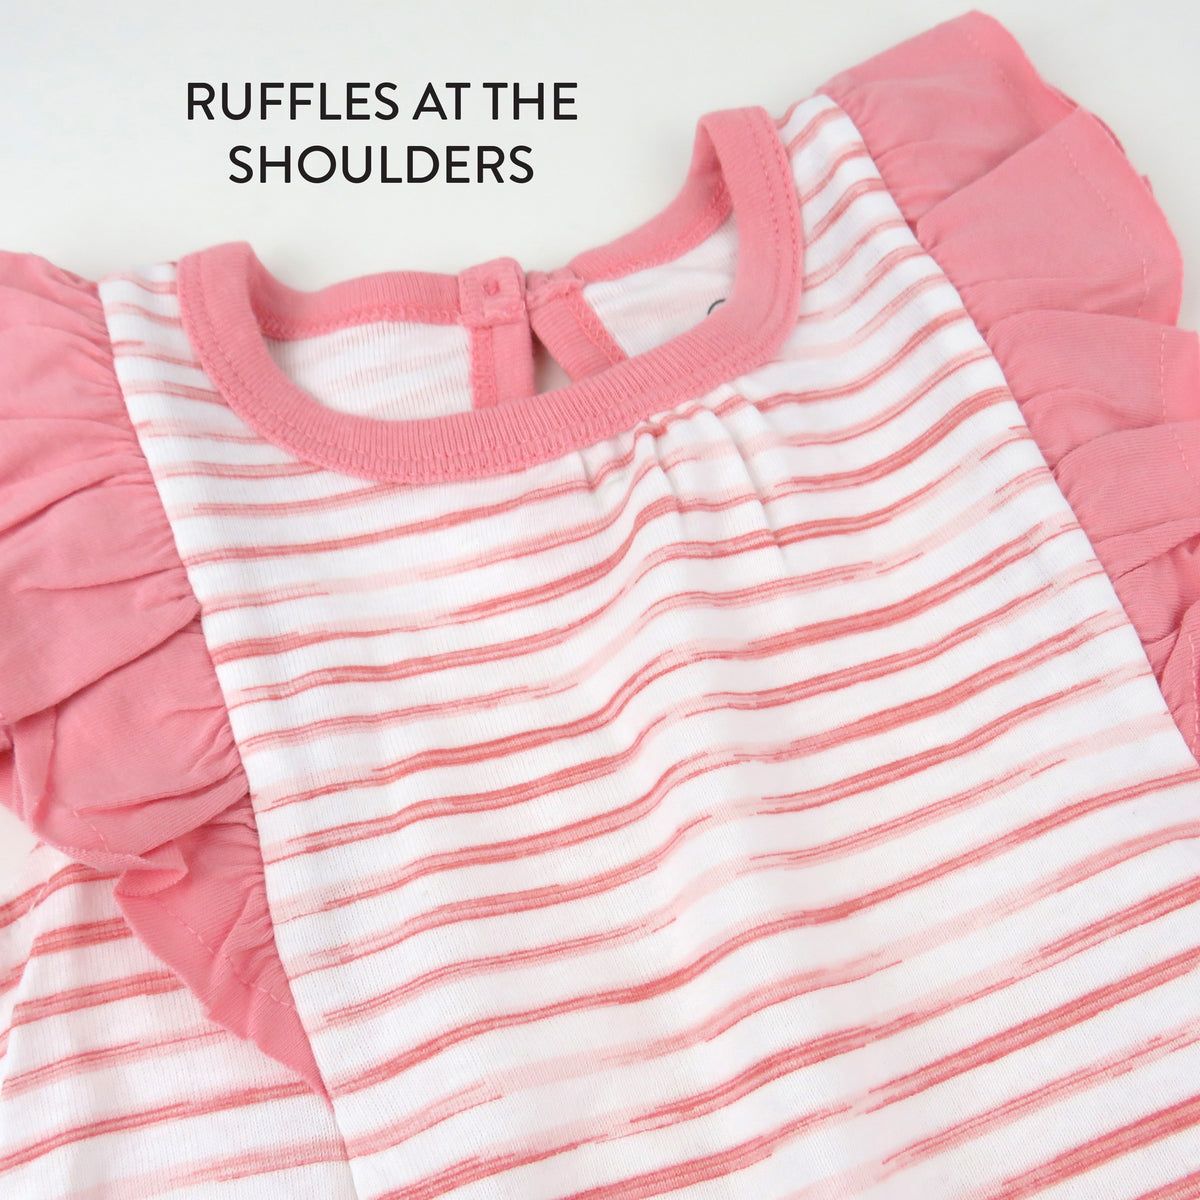  Rainbow Watercolor Girls' Ruffle Neck T-Shirt - Cool